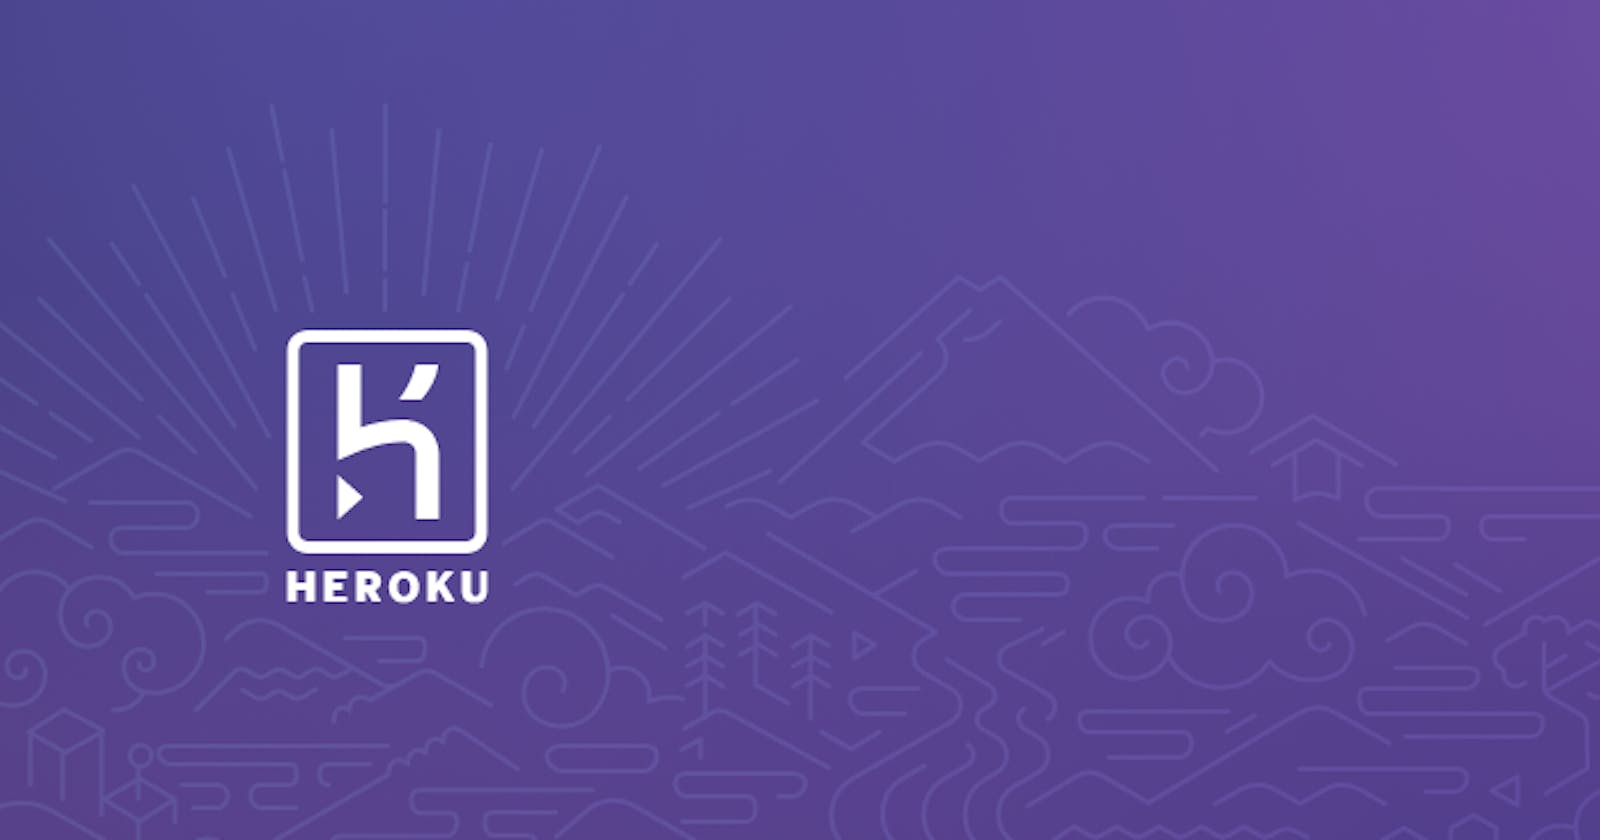 How to Deploy React App on Heroku from GitHub